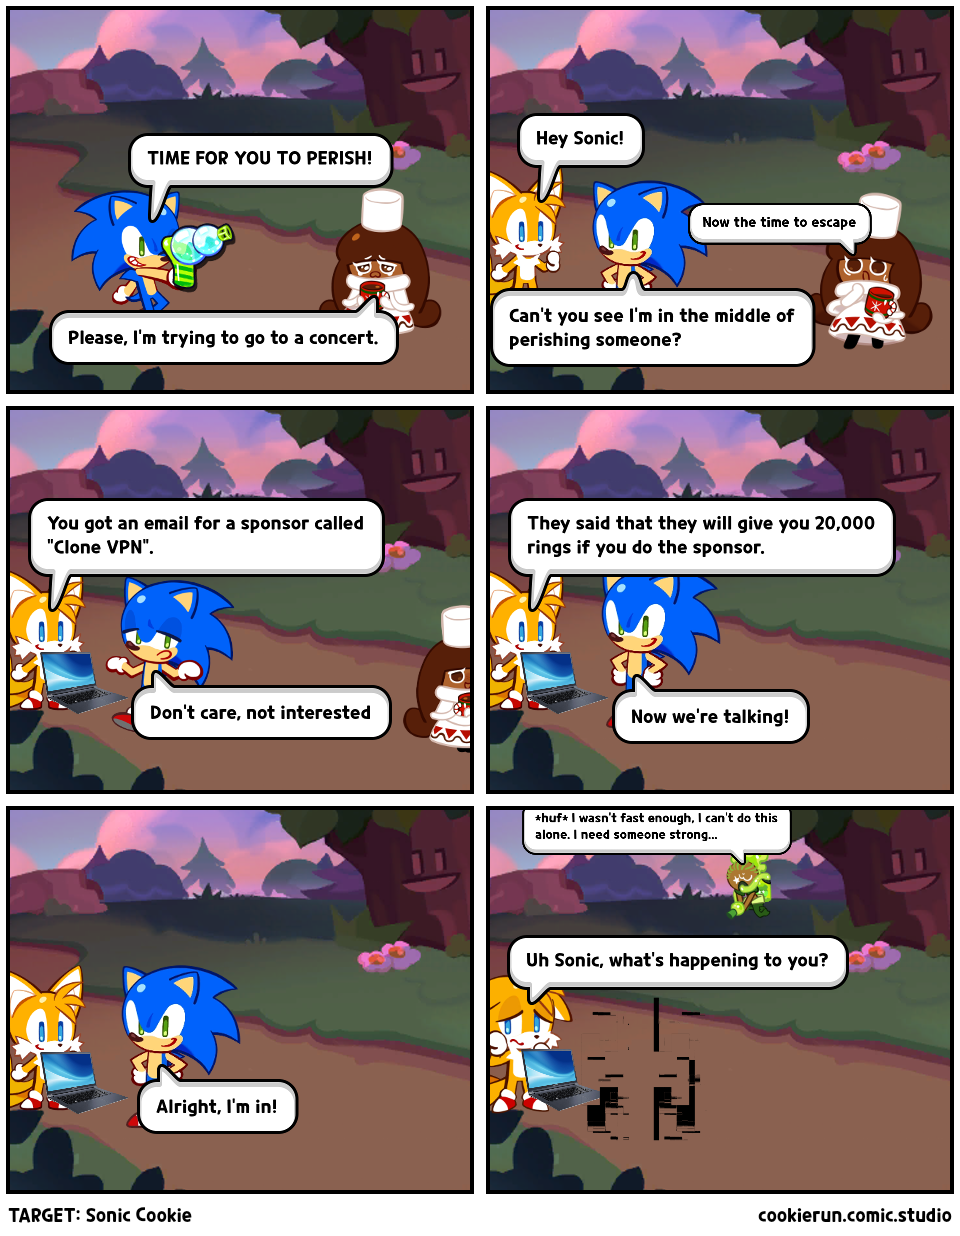 TARGET: Sonic Cookie